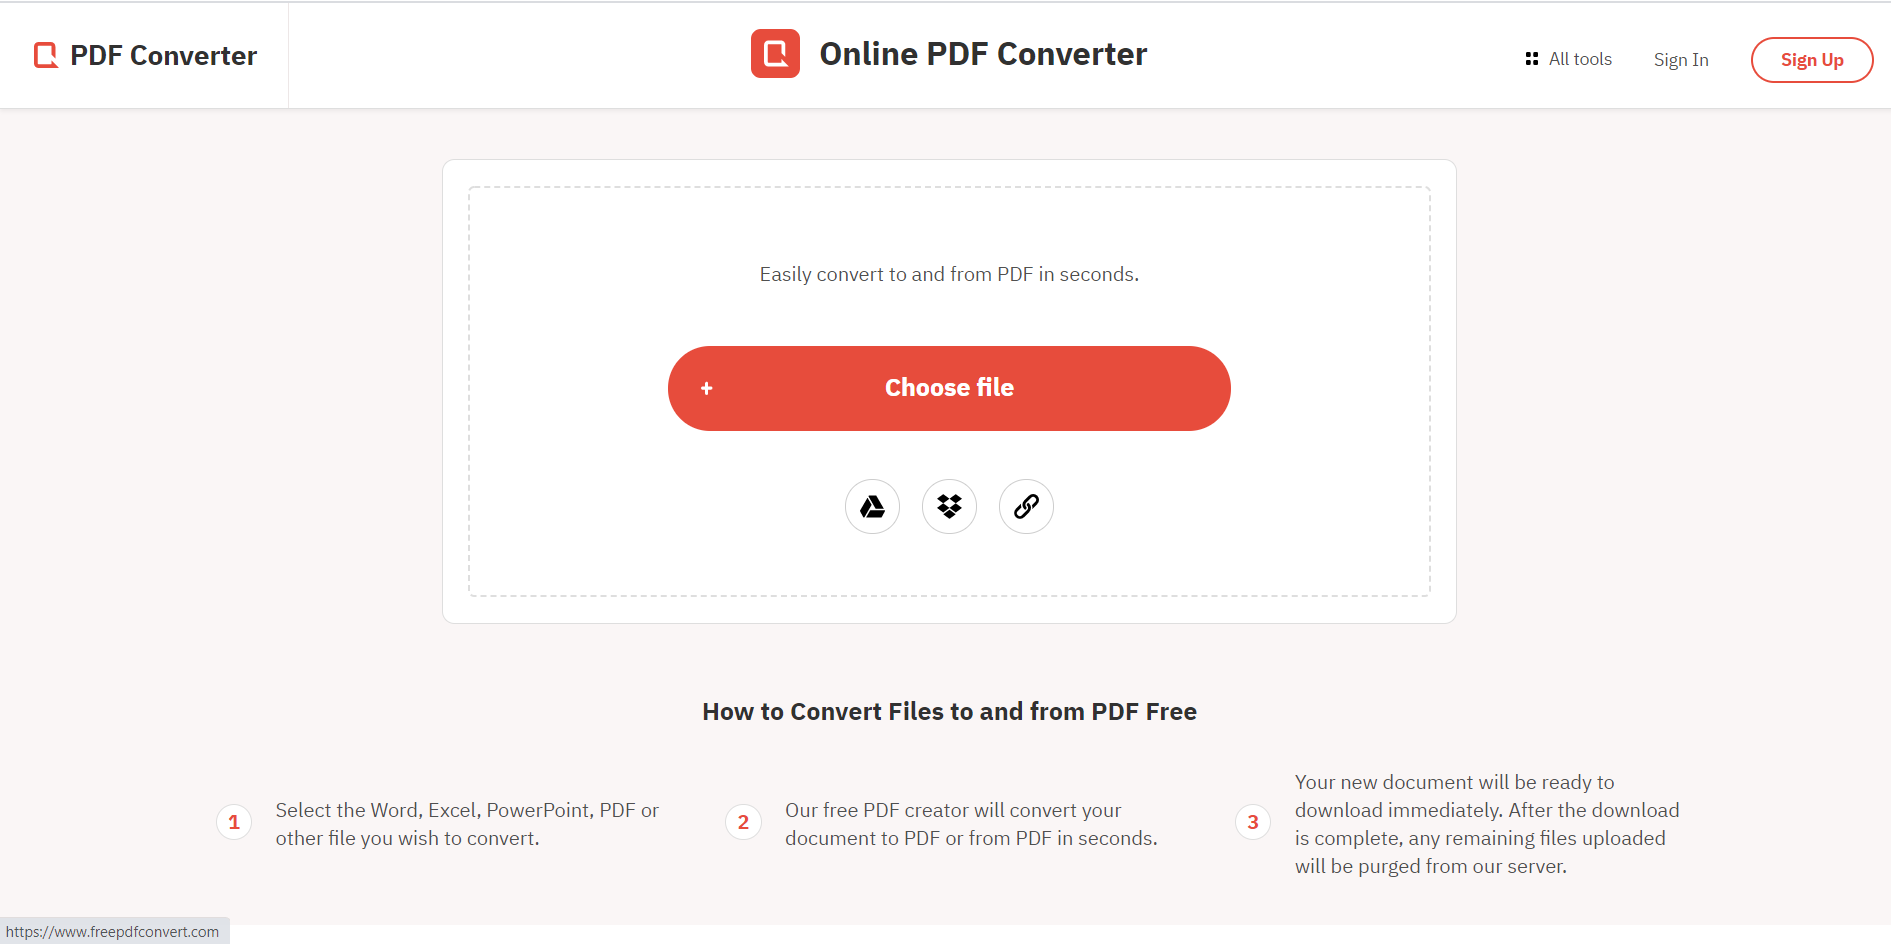 PDFConverter